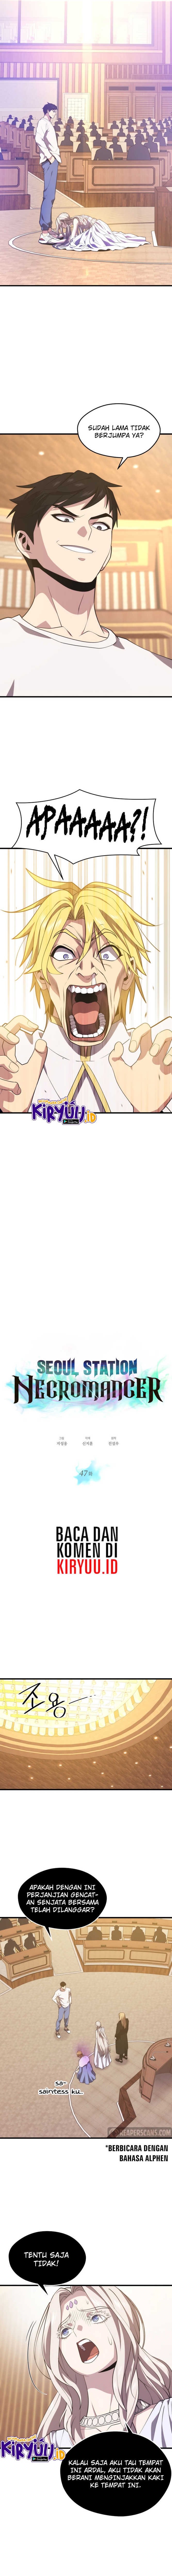 Seoul Station'S Necromancer Chapter 47 - 131